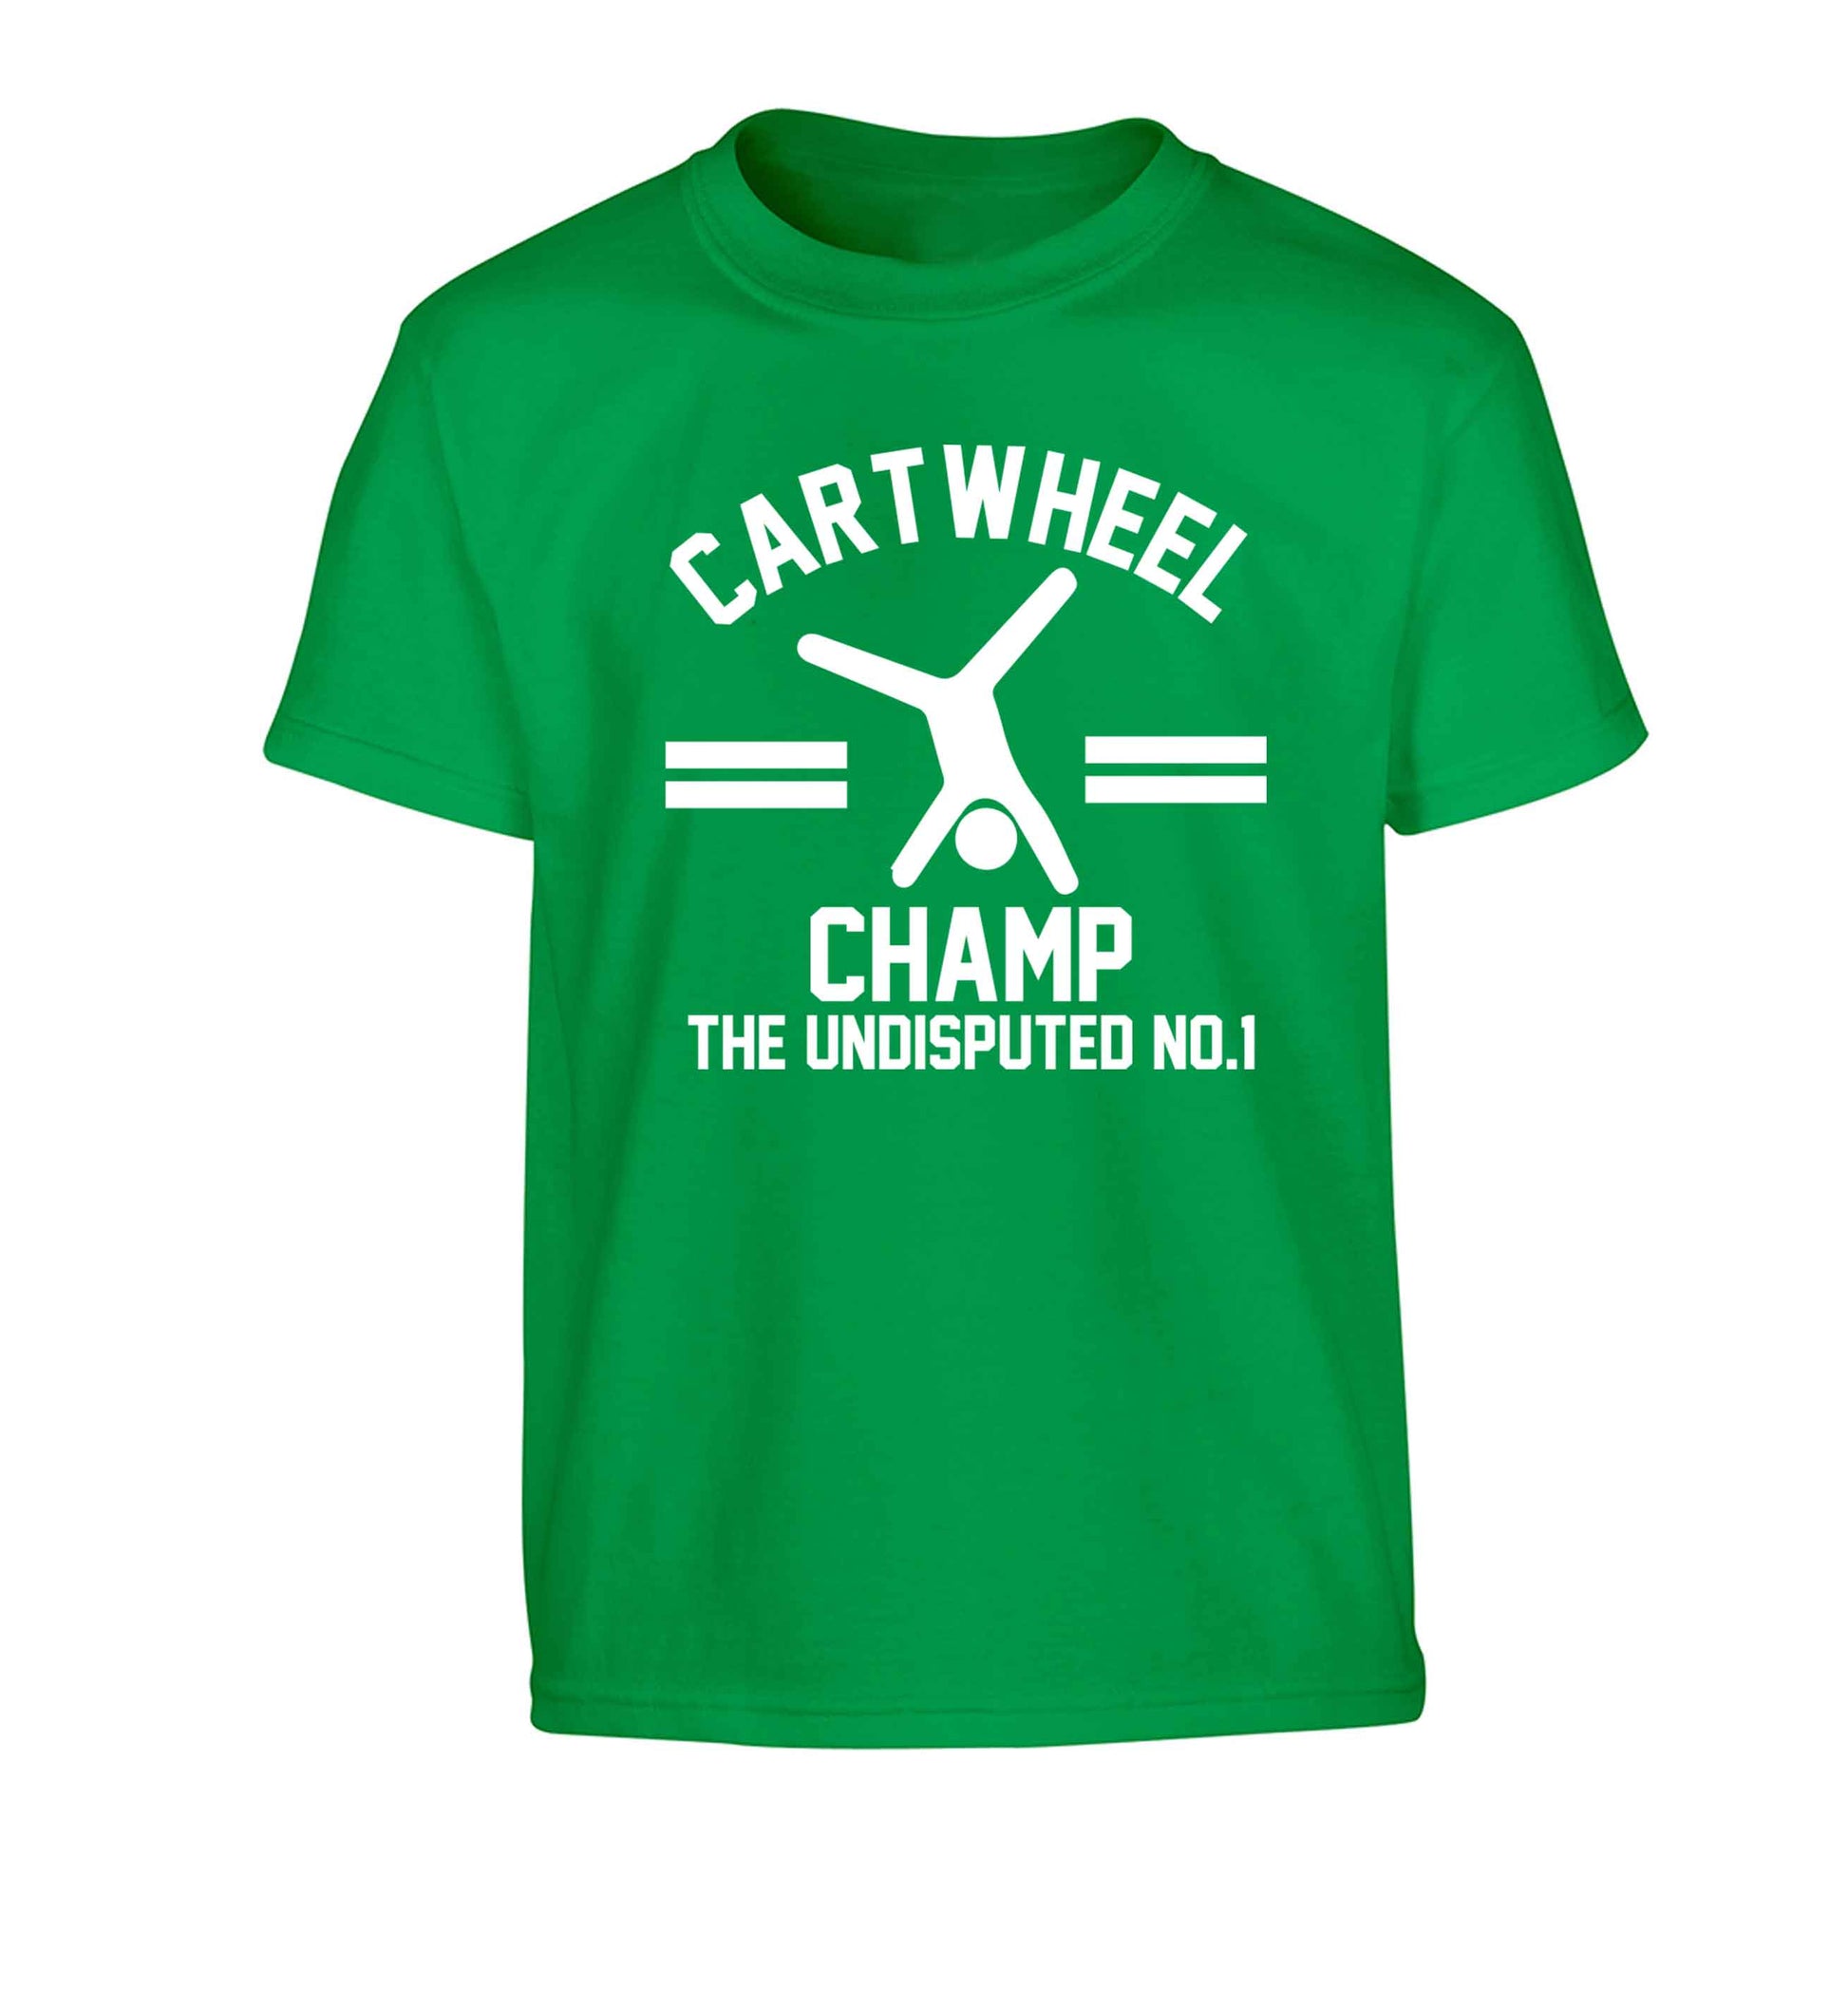 Undisputed cartwheel championship no.1  Children's green Tshirt 12-13 Years